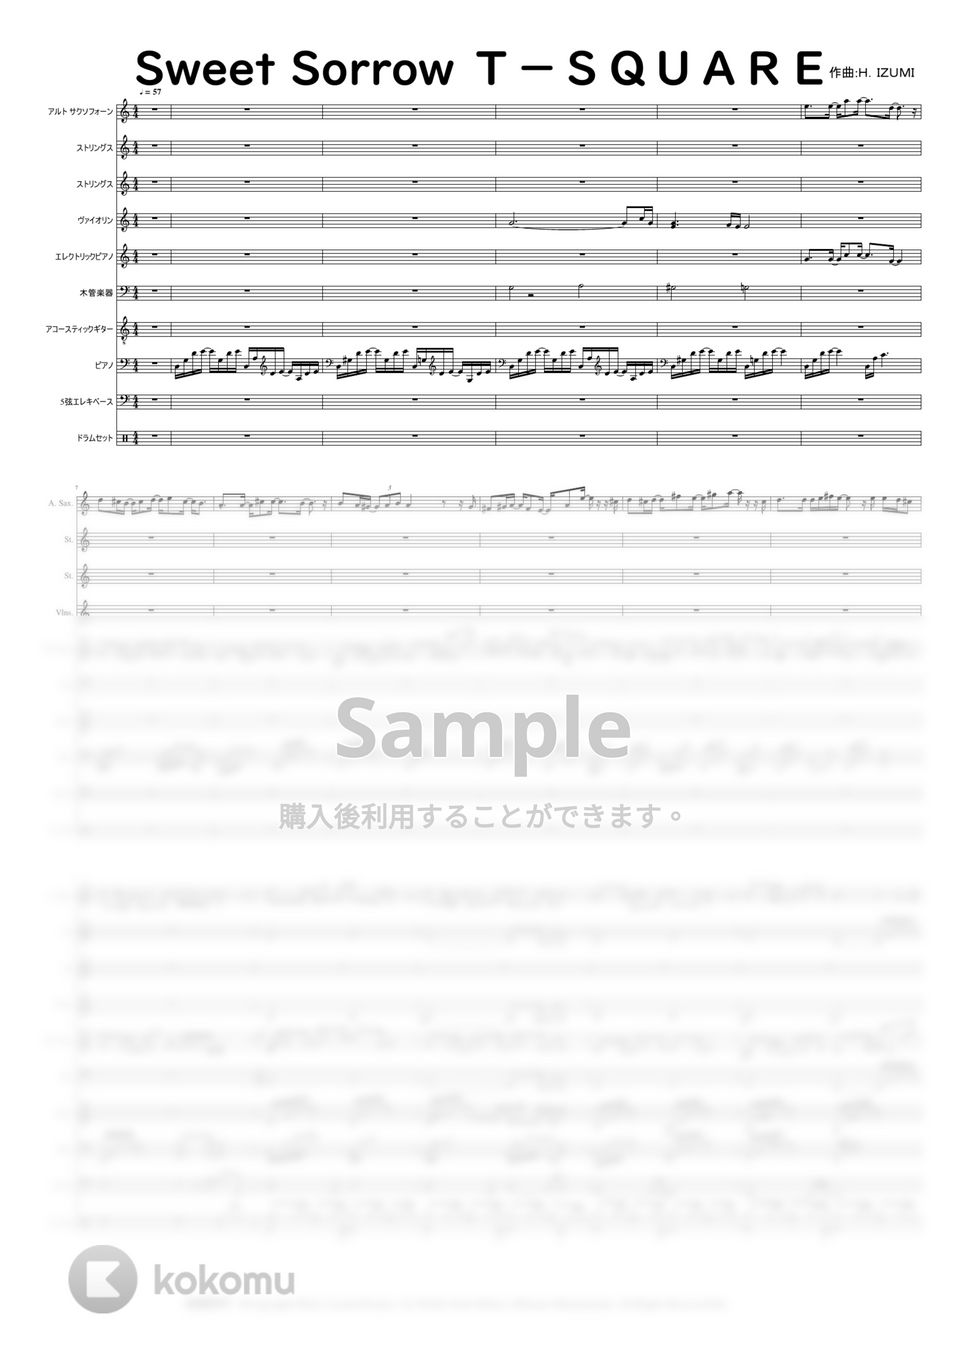 T-SQUARE  作曲:和泉宏隆 - T-SQUARE (Sweet Sorrow) (アルバム 夏の惑星  発売日1994年4月21日) by Mitsuru Minamiyama